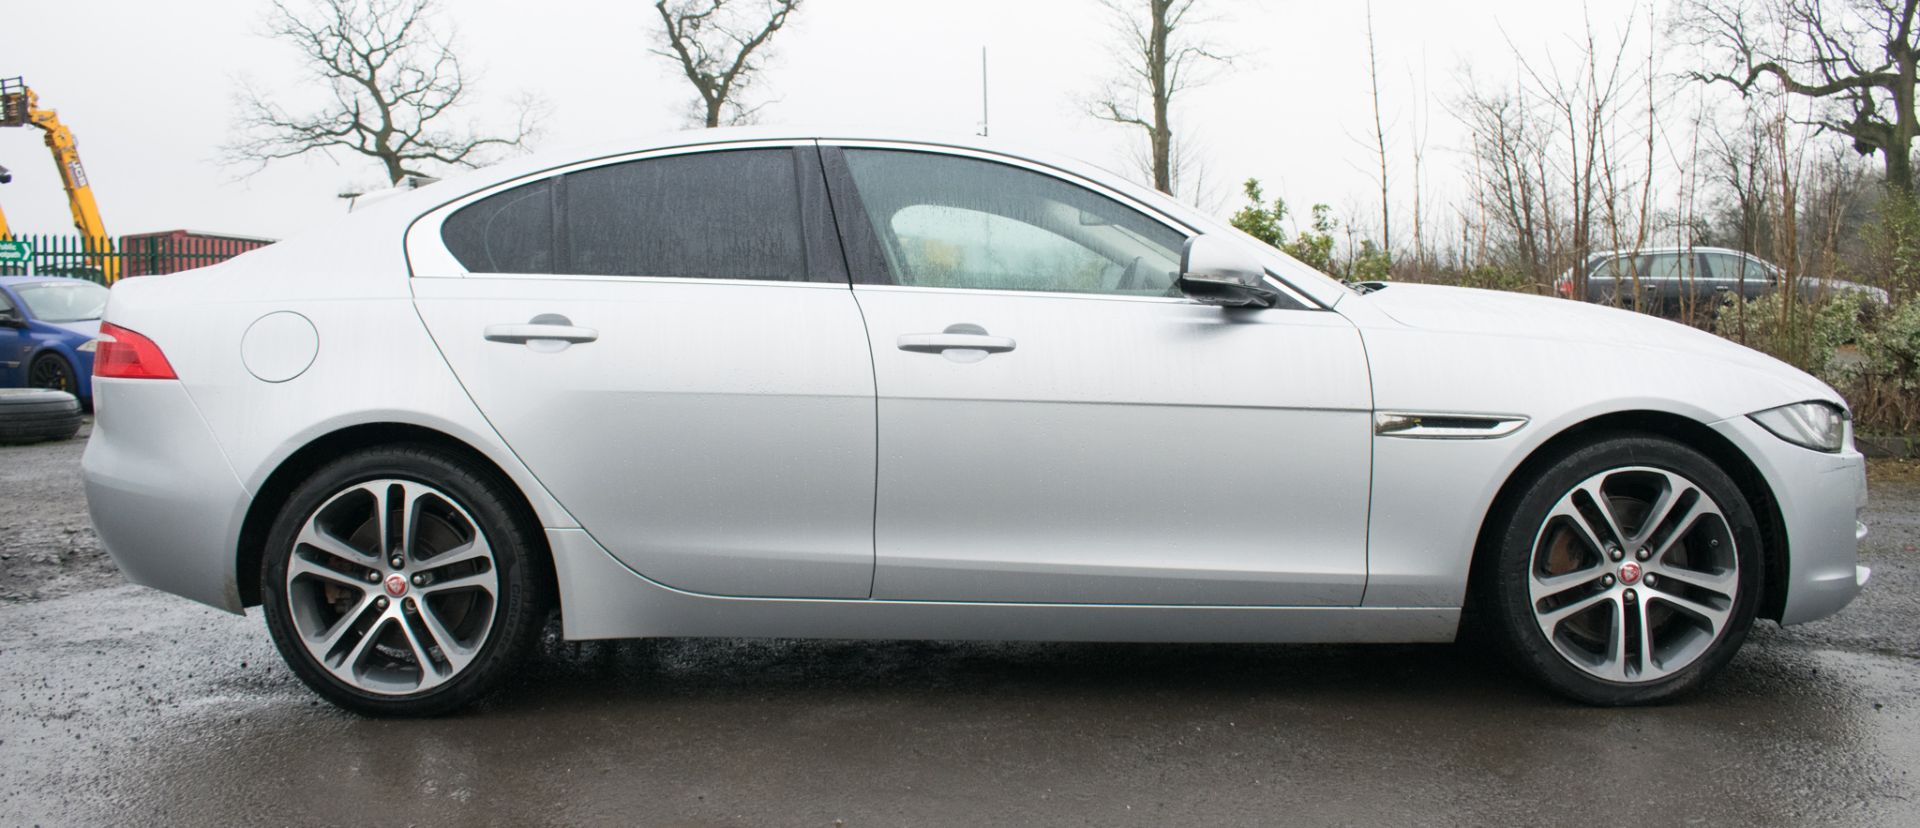 Jaguar XE Portfolio 2.0 litre petrol automatic 4 door saloon car Registration number: AV67 RPY - Image 8 of 23